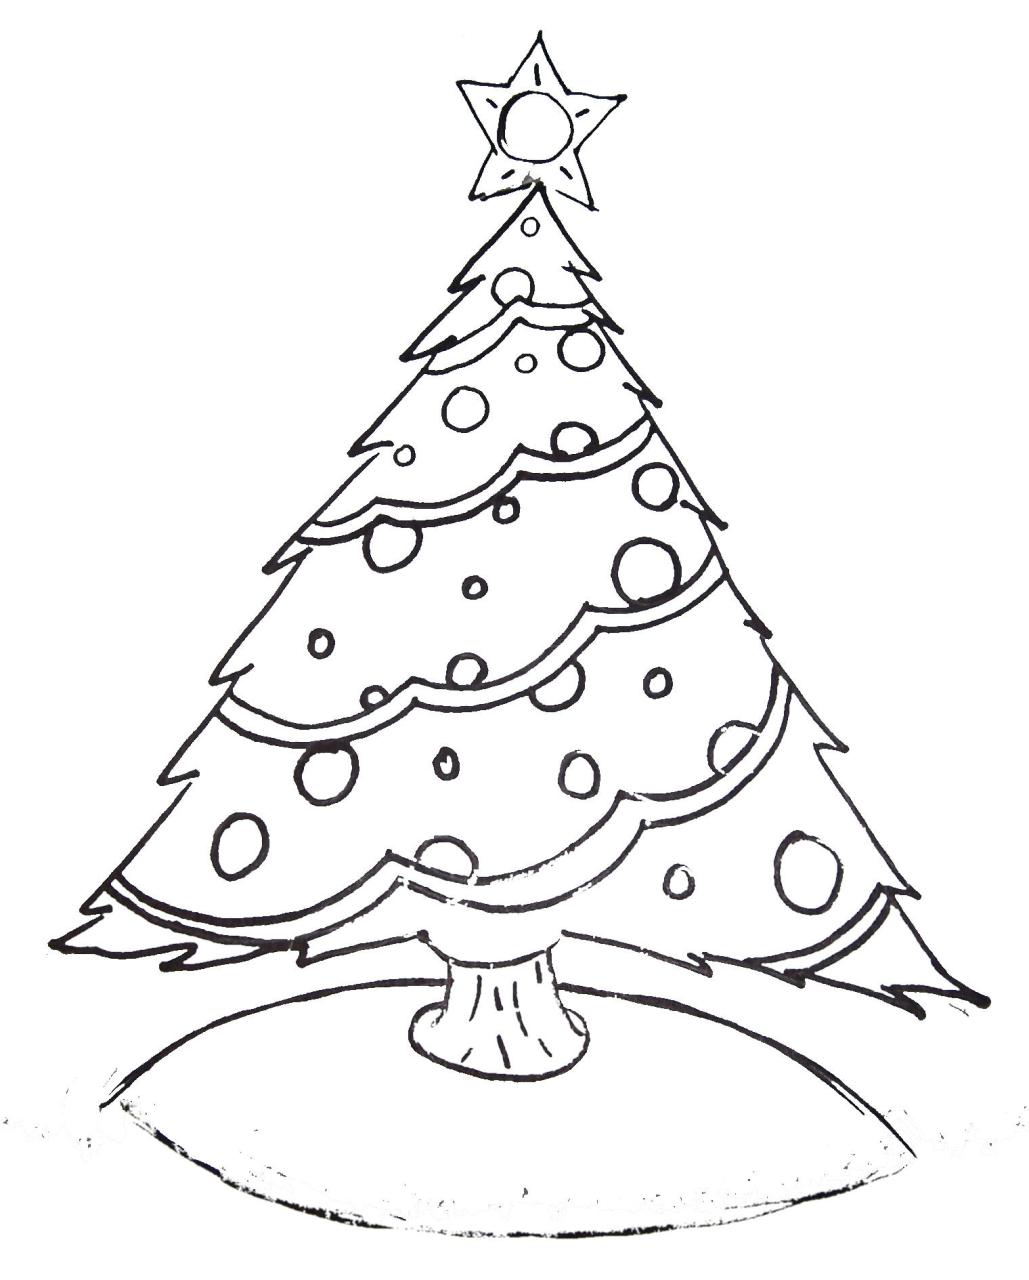 Free Printable Christmas Tree and Santa Coloring Pages Kids Creative